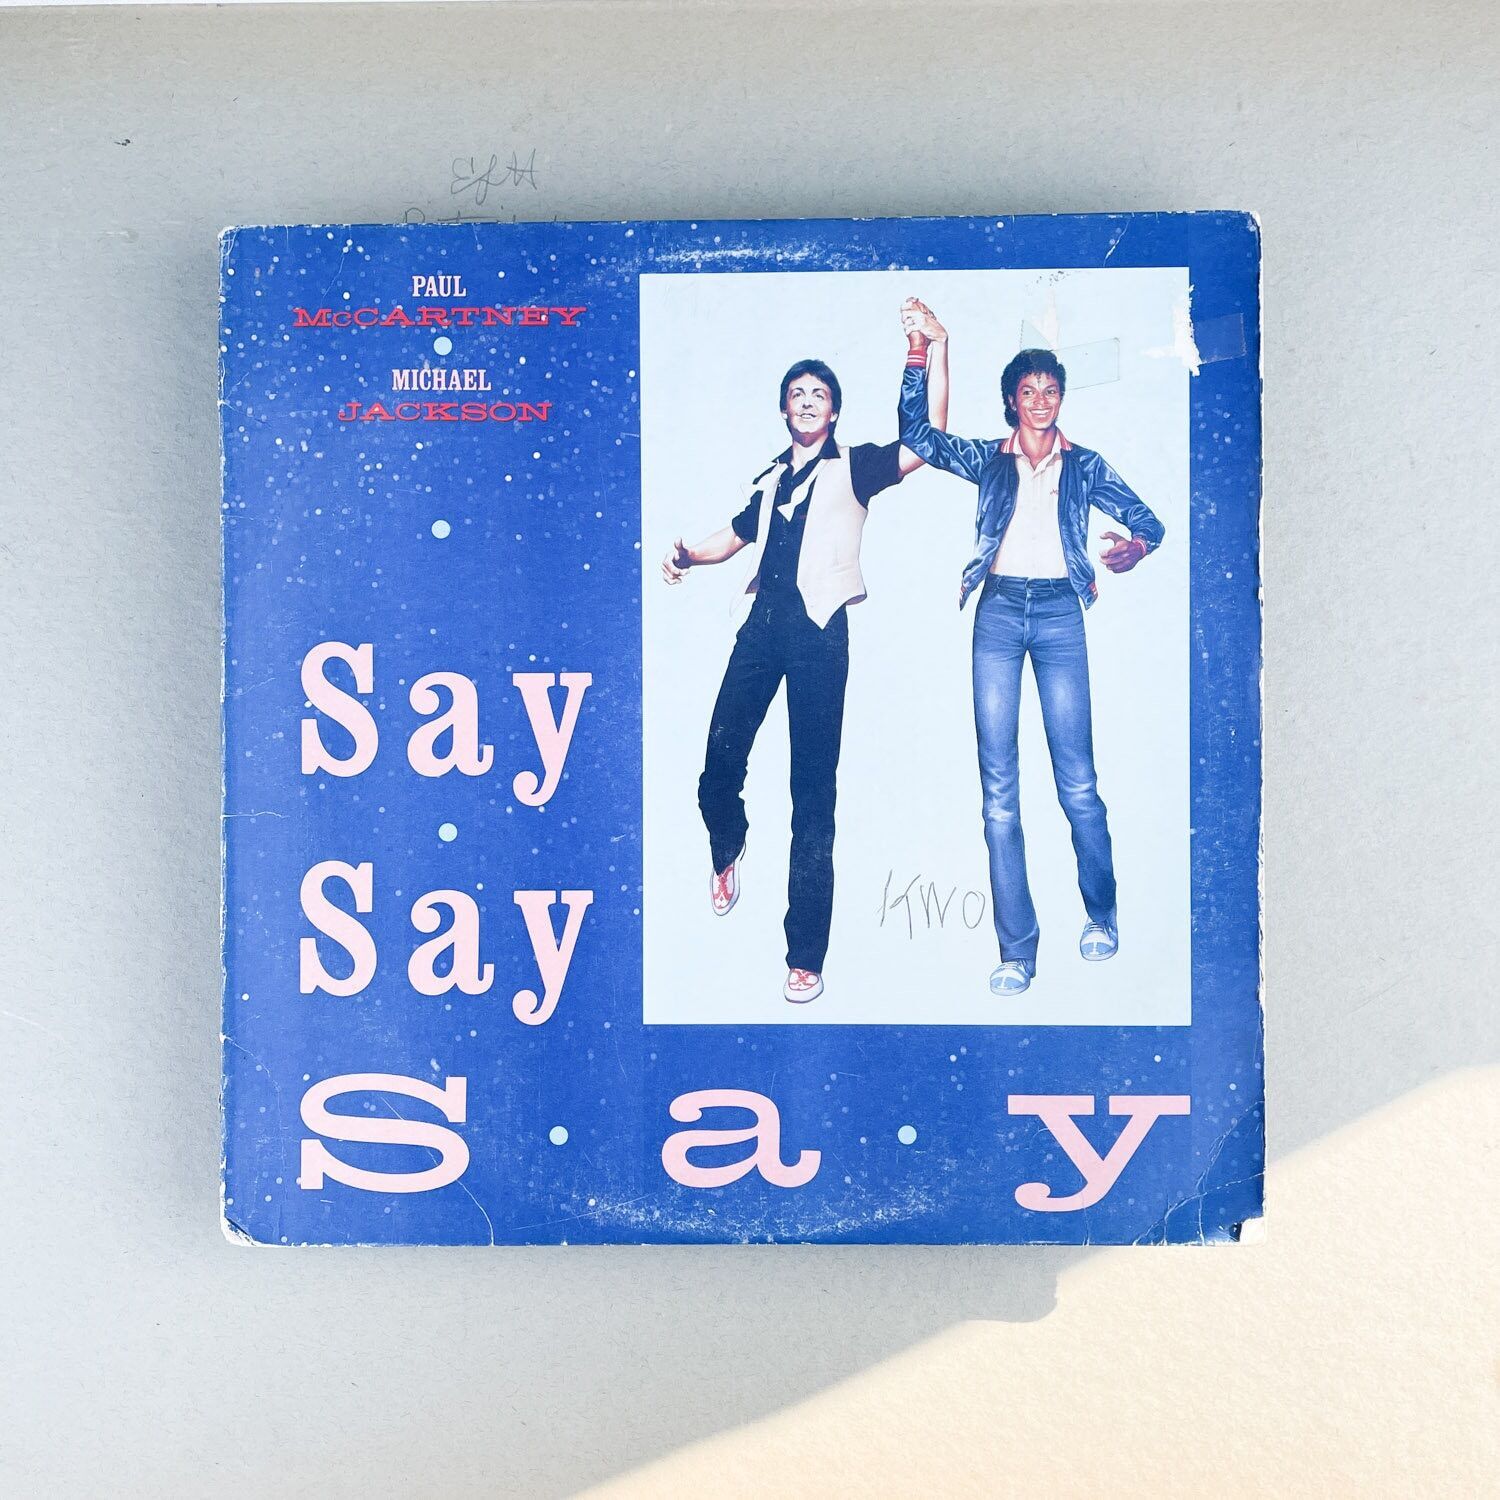 Paul McCartney & Michael Jackson - Say Say Say - Vinyl LP Record - 1983